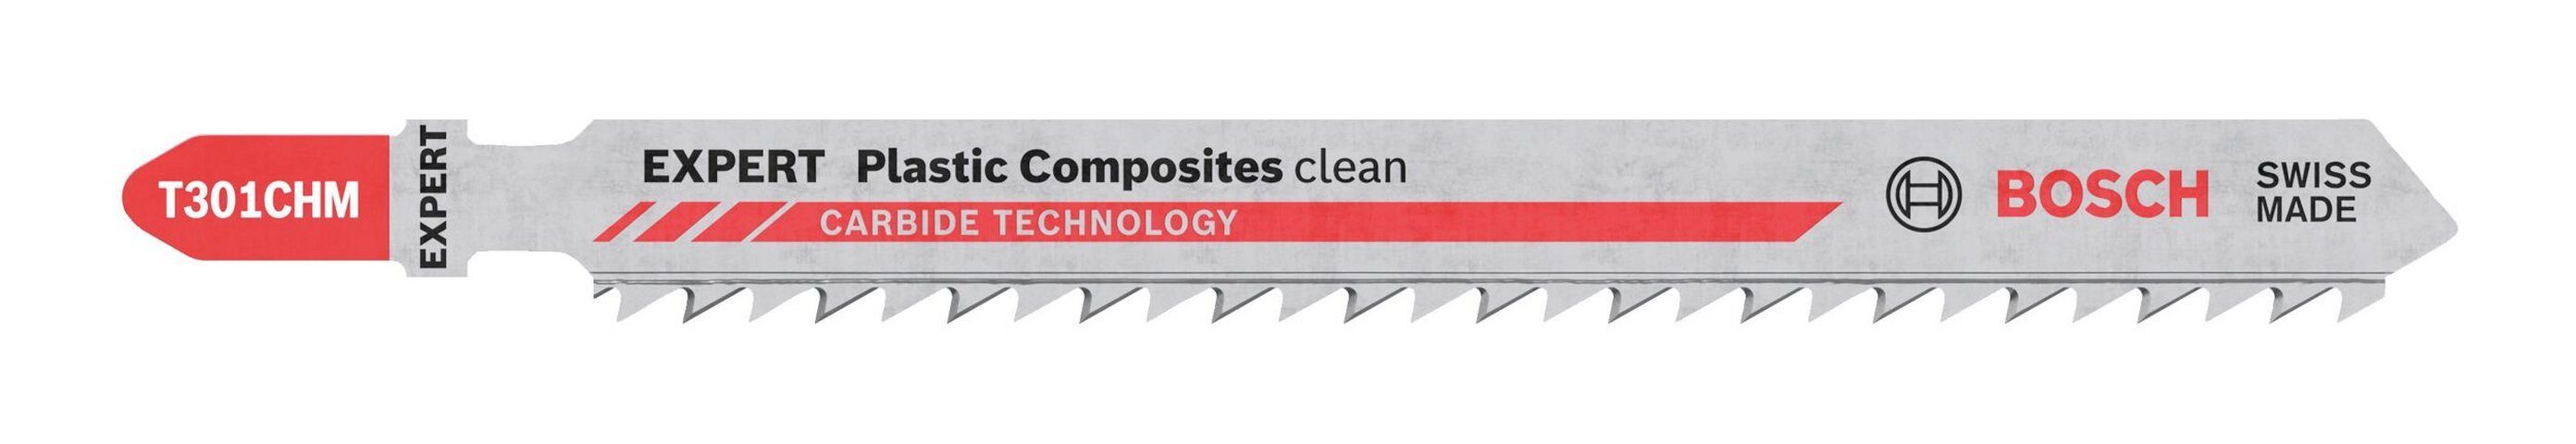 BOSCH Stichsägeblatt Expert Plastic Composites Clean T 301 CHM (3 Stück), Stichsägeblatt - 3er-Pack